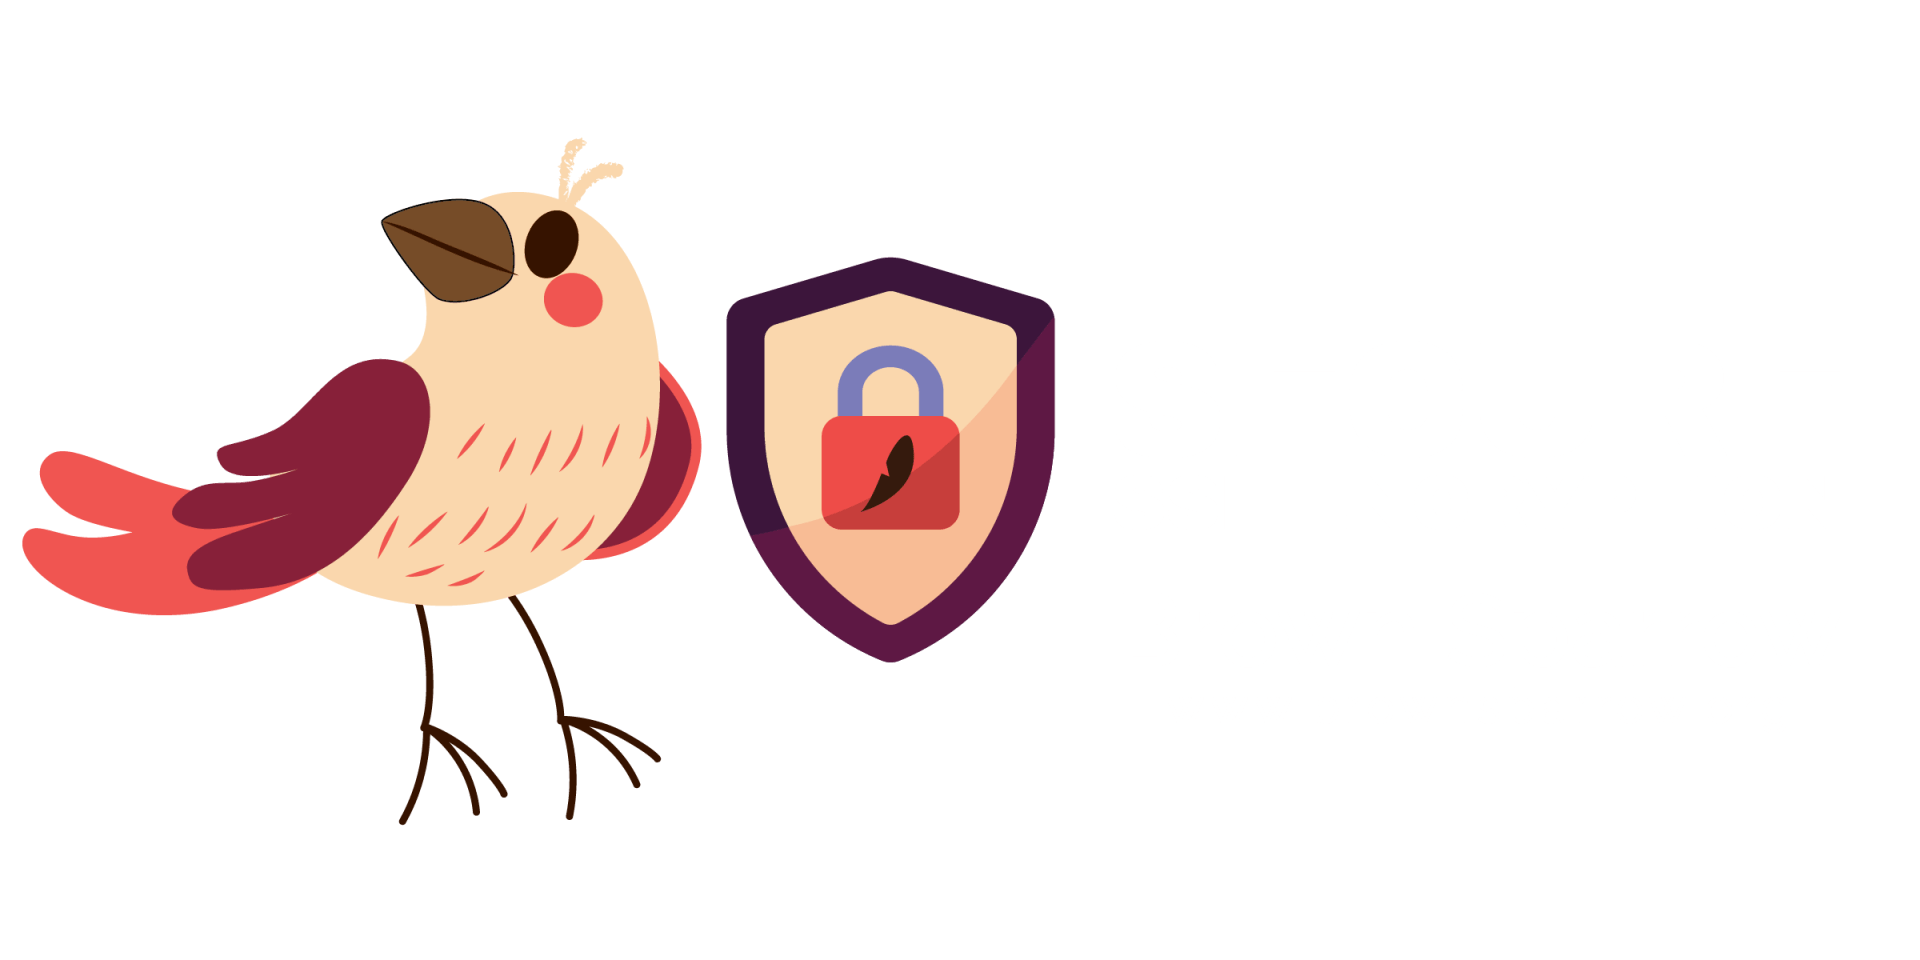 Brown Sparrow LLC